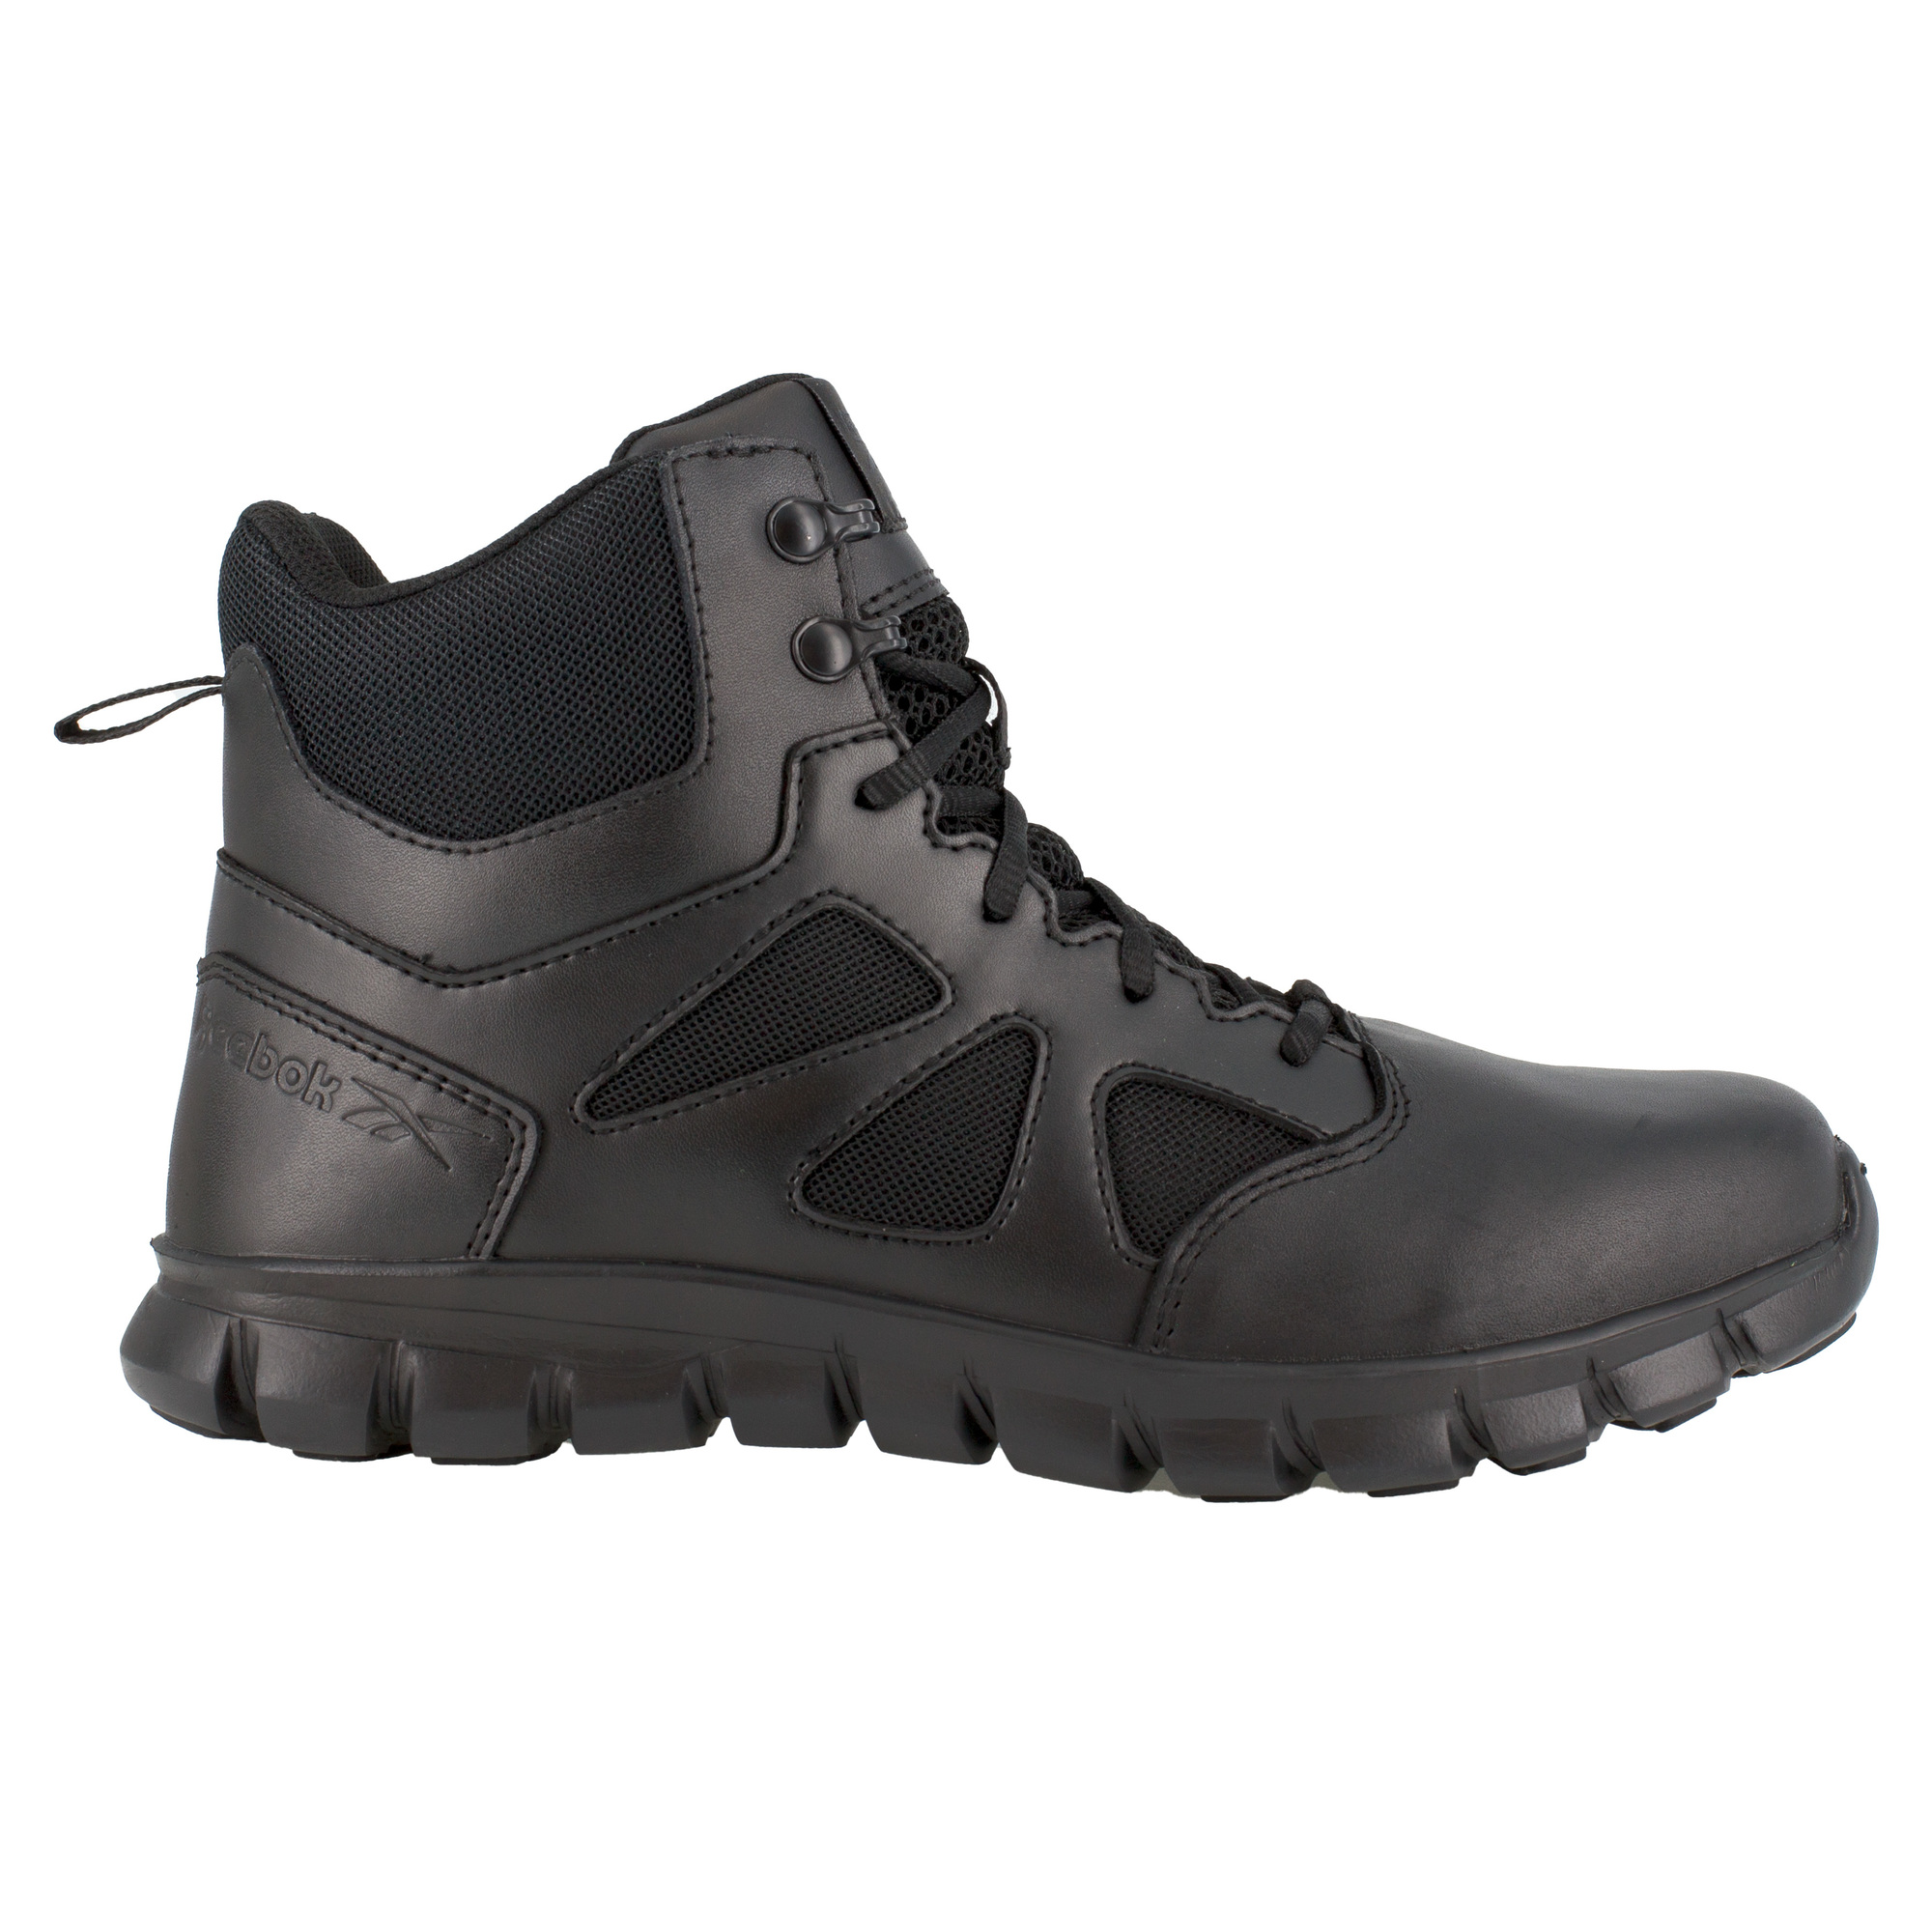 Reebok, 6Inch Tactical Boot w/Side Zipper, Size 8, Width Wide, Color Black, Model RB086